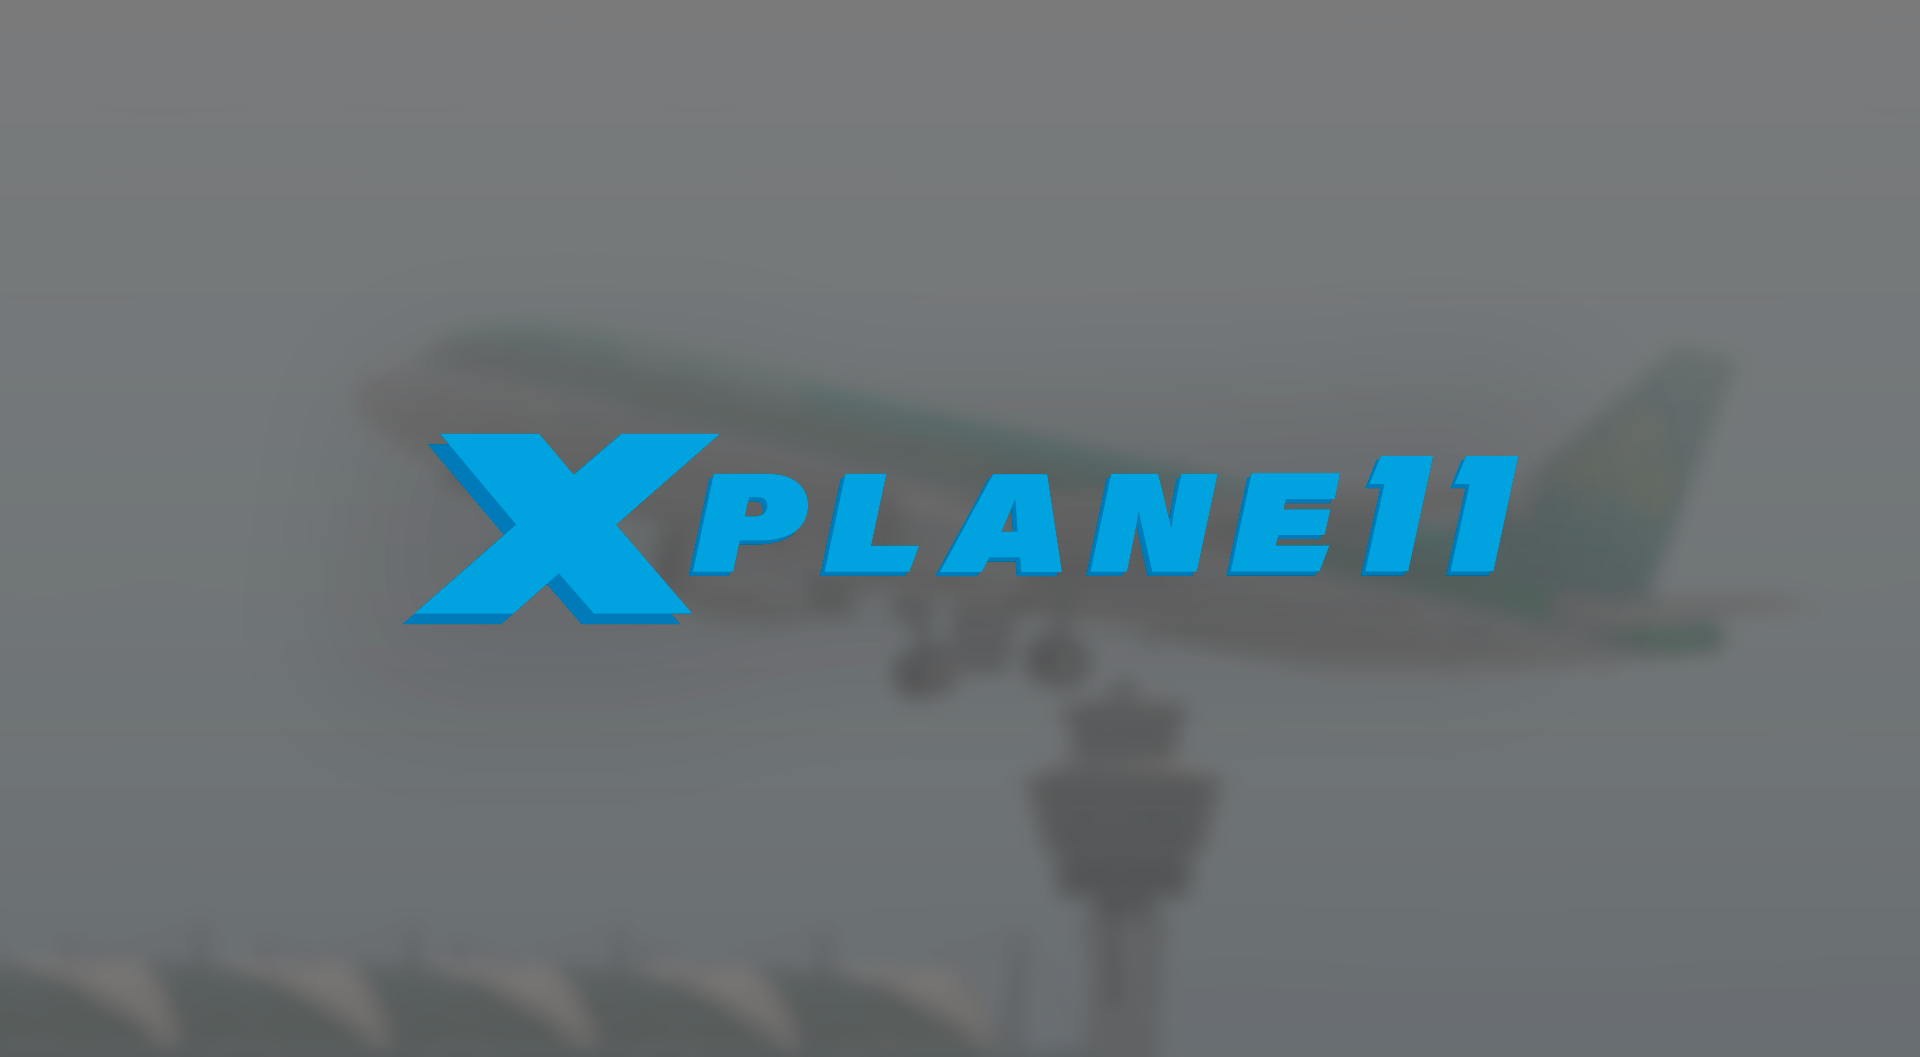 pirated x plane 11 key